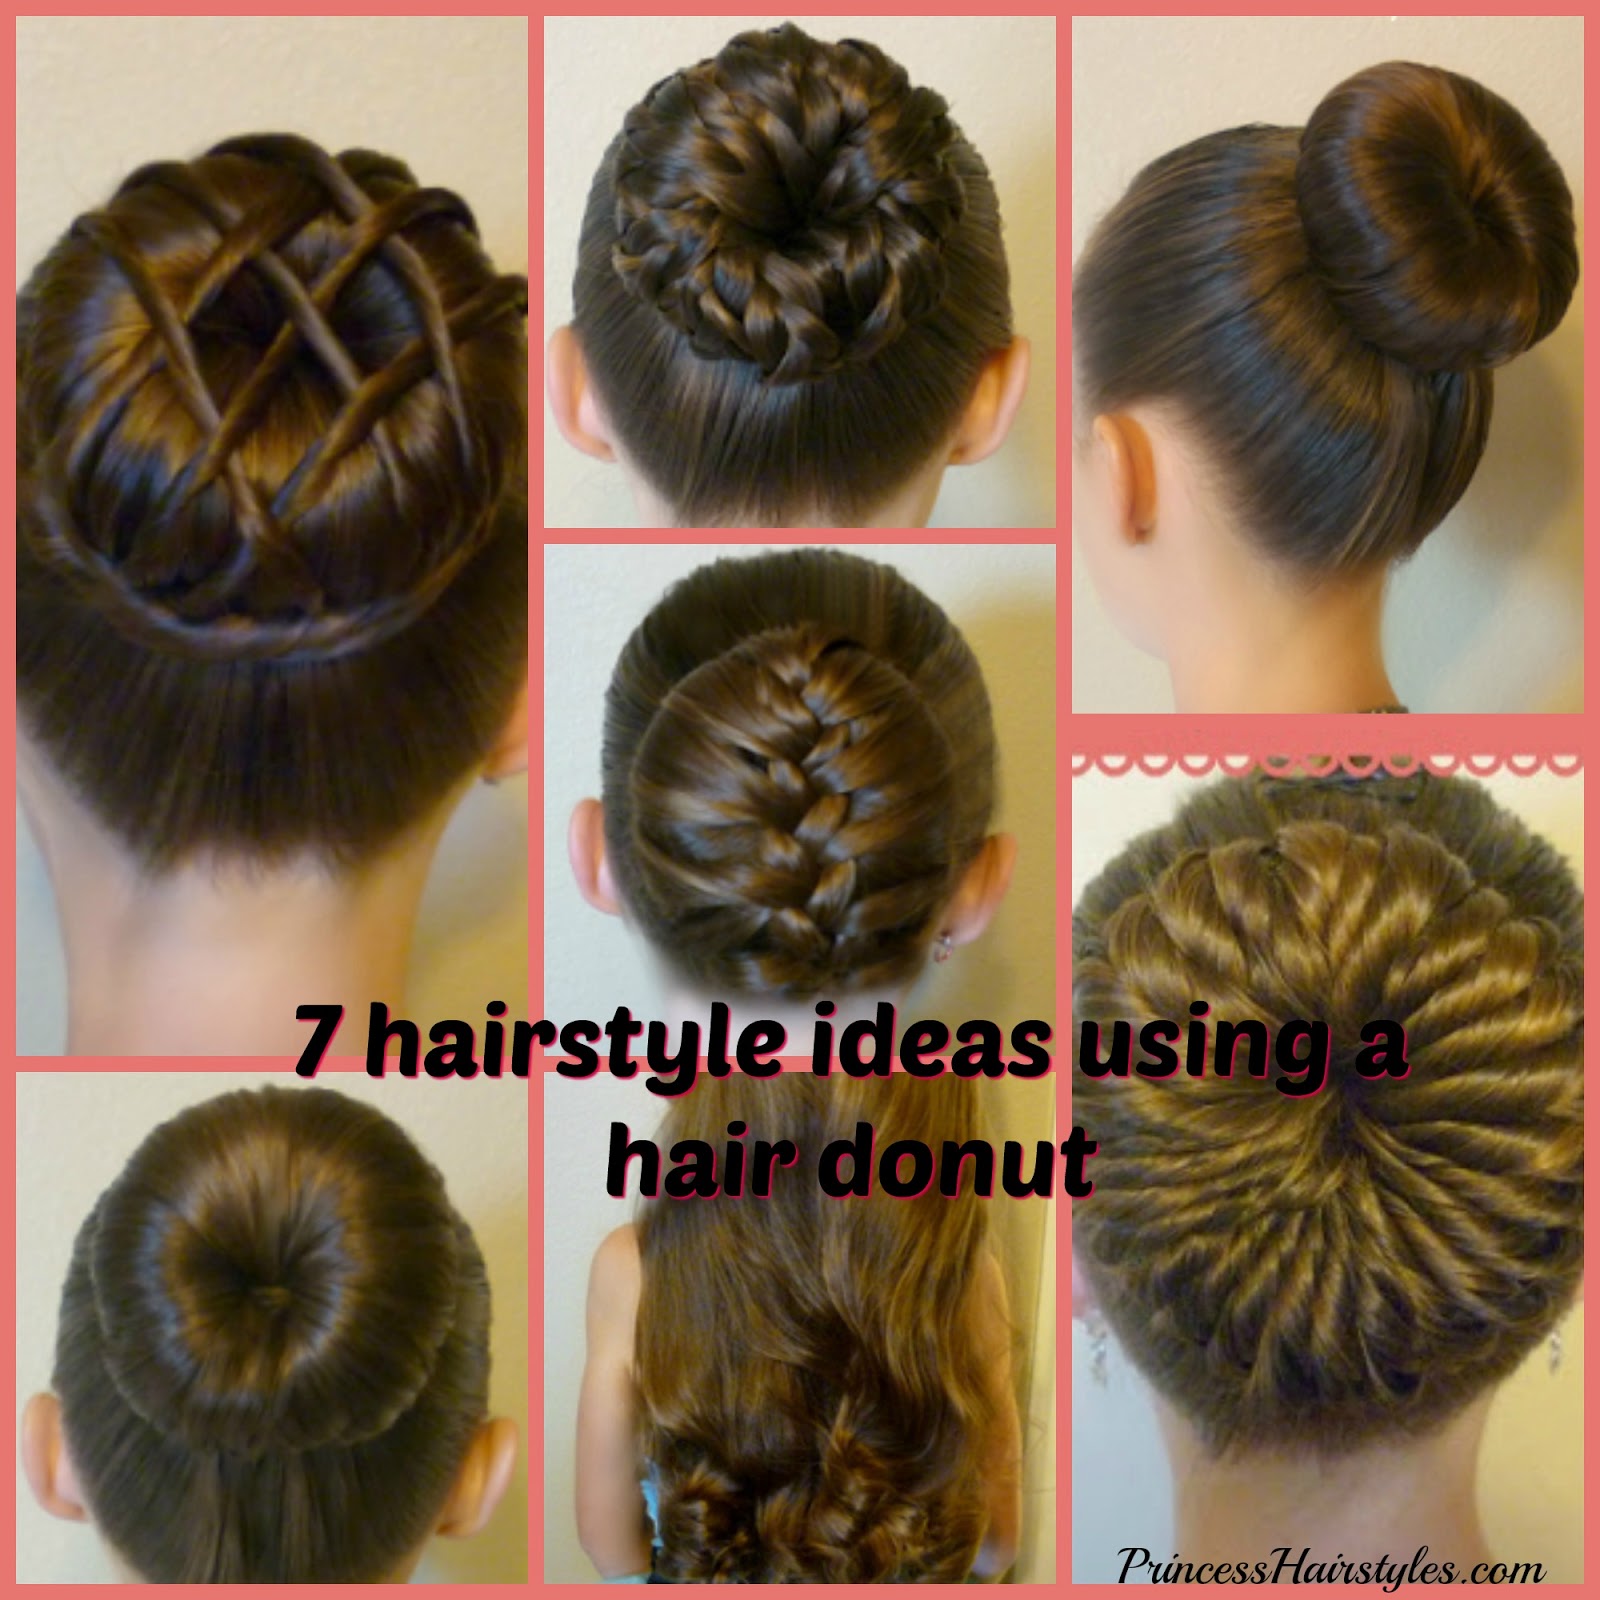 30 Buns in 30 Days - Day 11 - Donut bun and braid hairstyle - Hair Romance